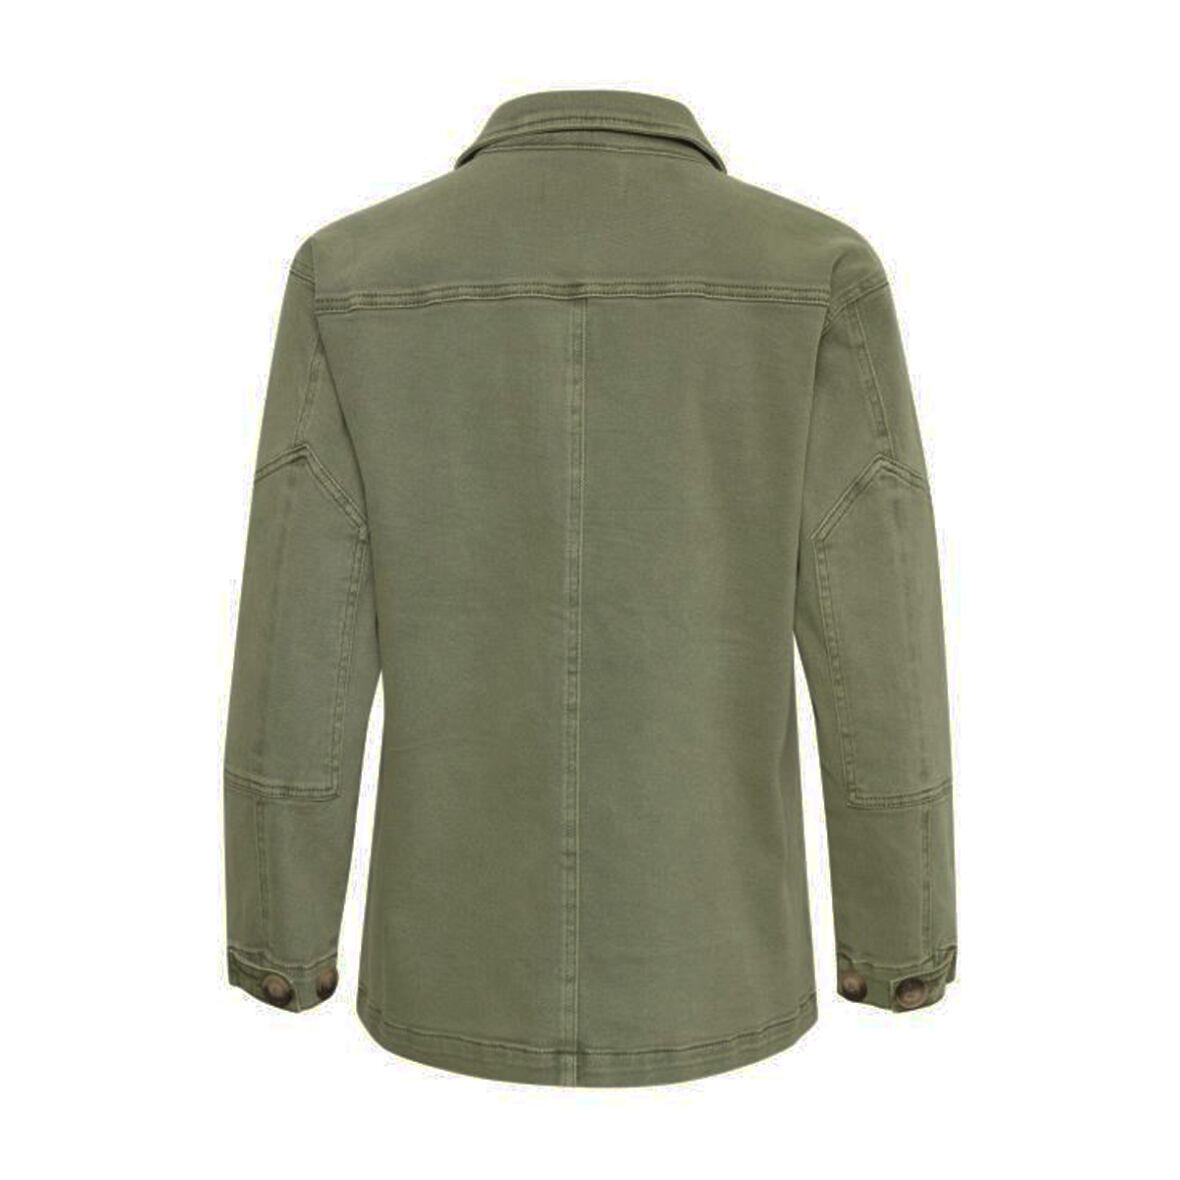 DENIM HUNTER - The Army Jacket Dusty Olive 10702709 - Jydepotten.dk Fri Fragt